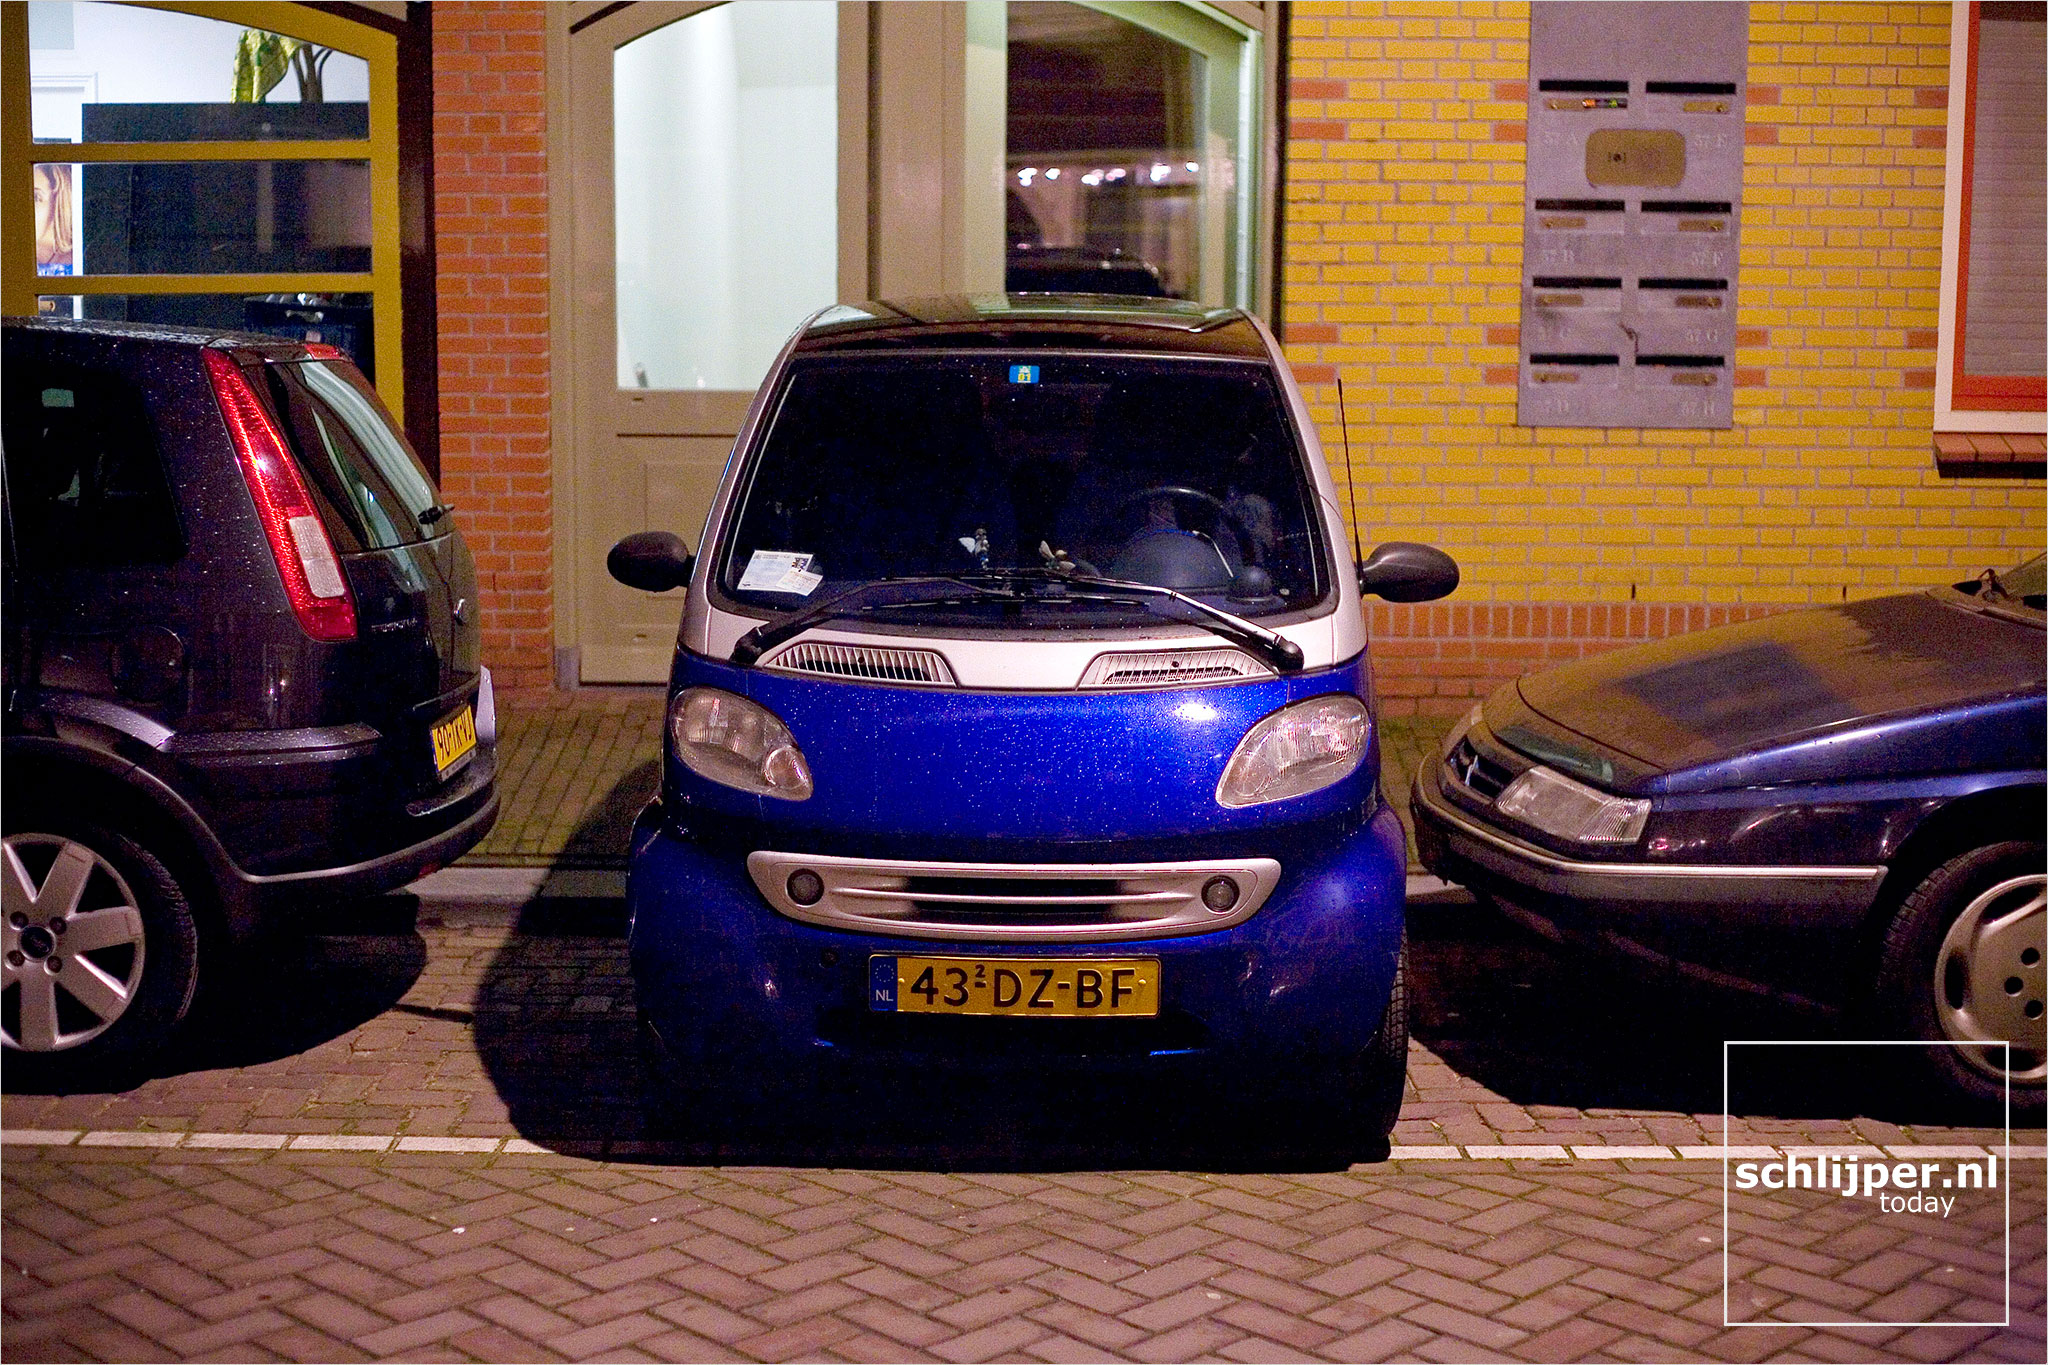 Nederland, Amsterdam, 7 februari 2007